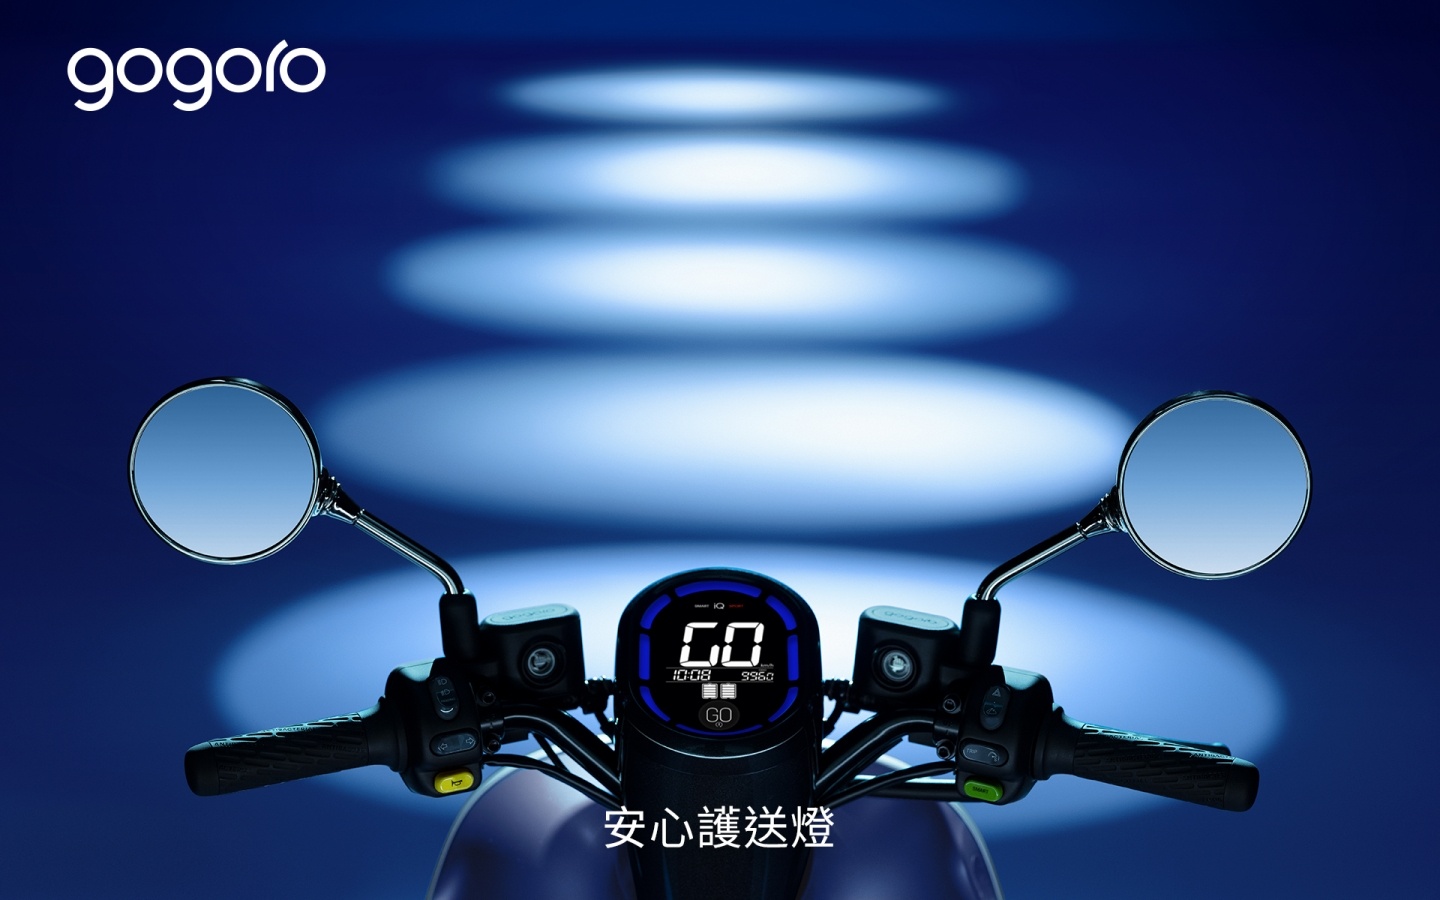 Gogoro 新車款『 Gogoro Delight 』登場！專為女性騎士量身打造 貼心設計帶你一次看